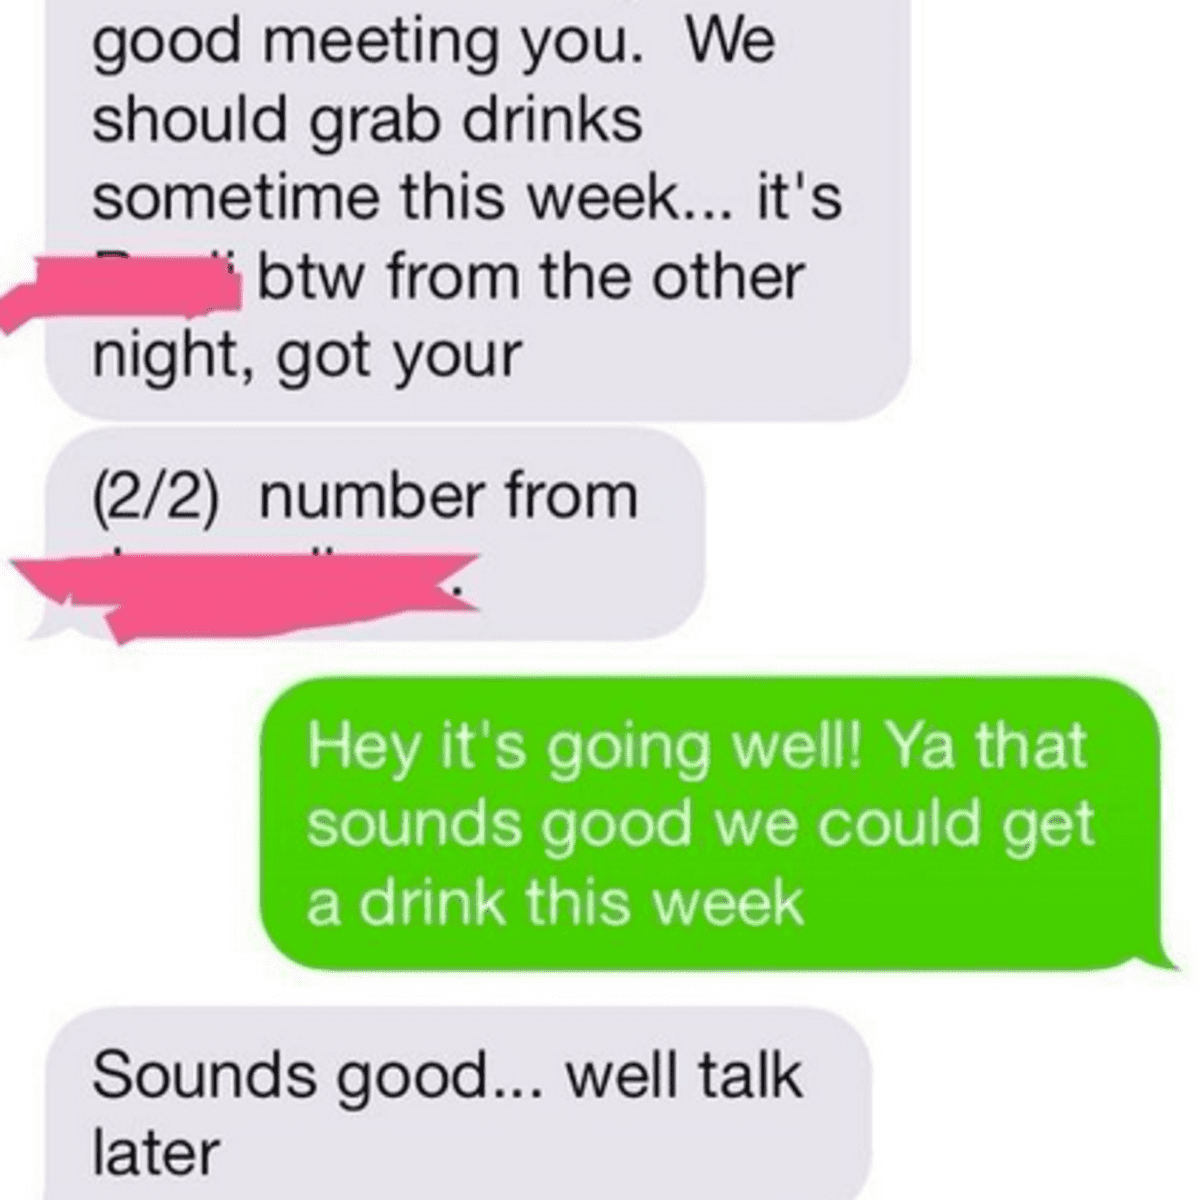 Signs of flirting through text